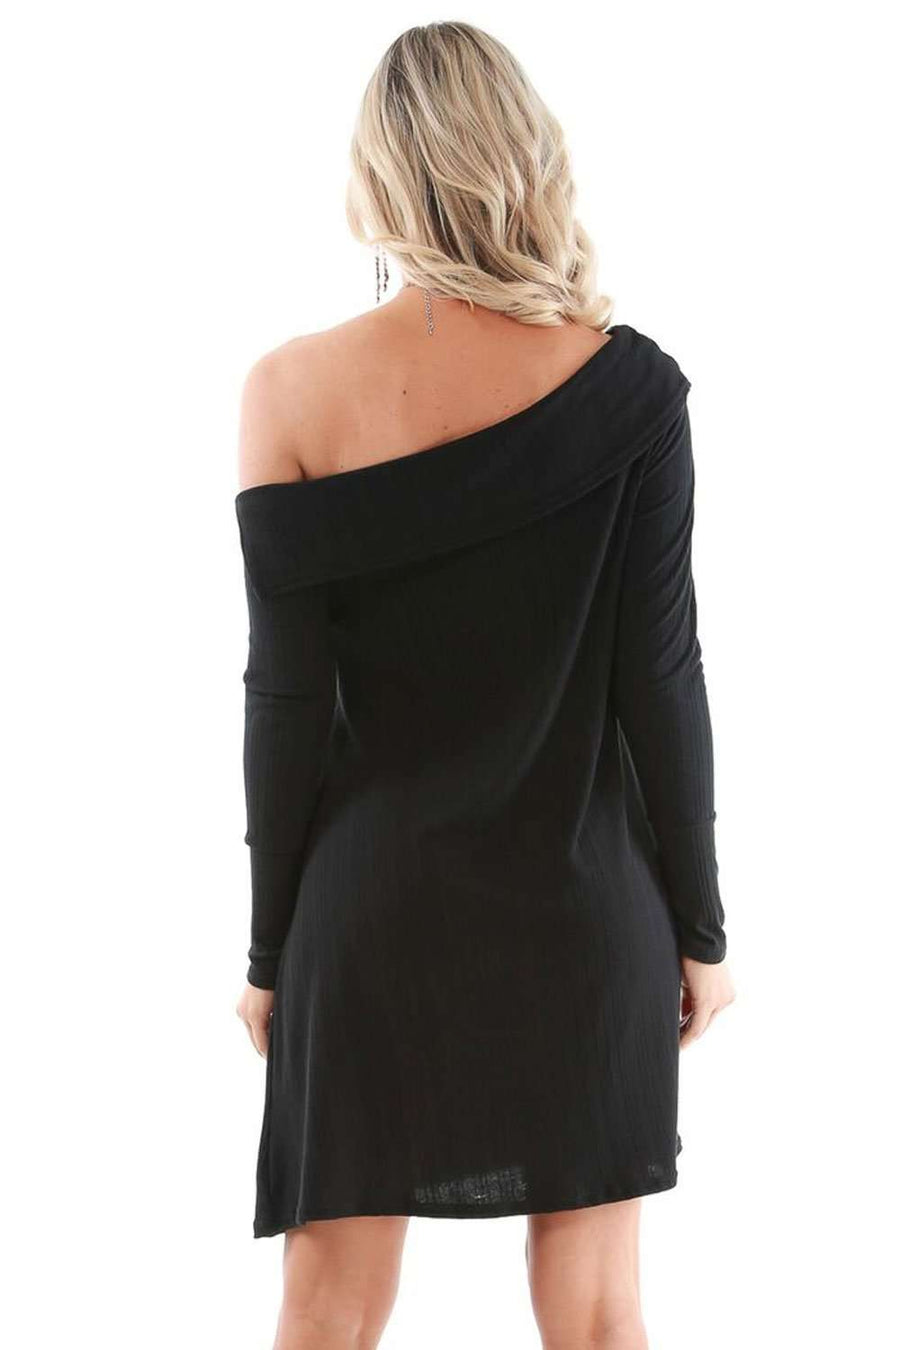 Zara One Shoulder Ribbed Swing Dress - bejealous-com